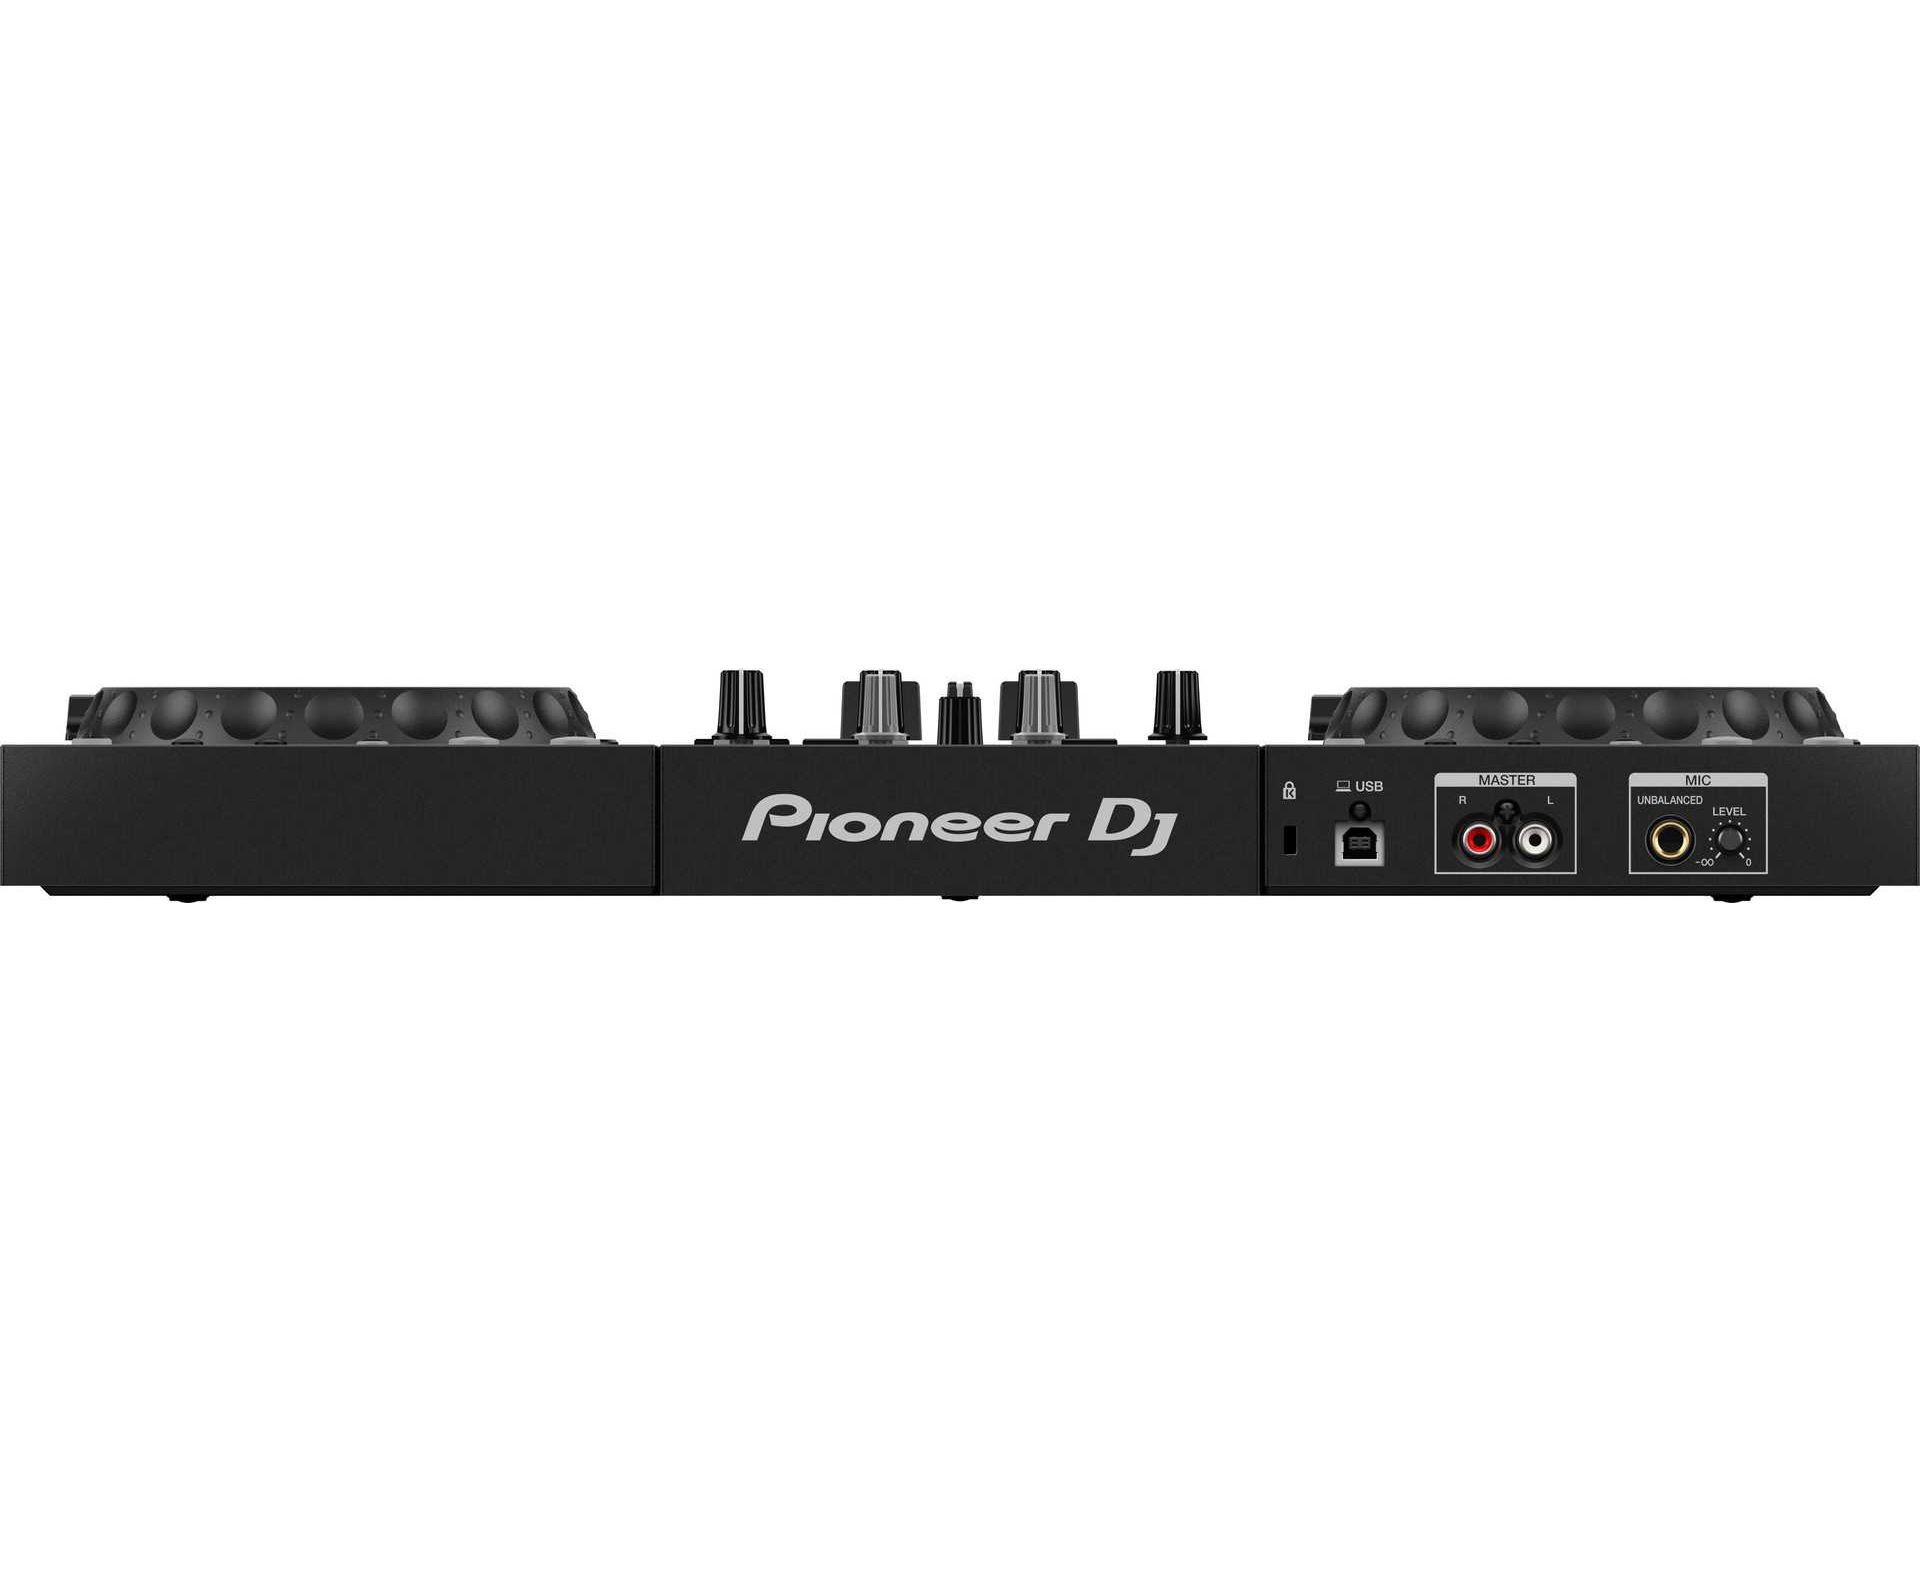 Ddj 400 купить москва. DJ-контроллер Pioneer DDJ-400. Pioneer DDJ flx4. Pioneer DJ DDJ-rev1. Пионер 400 контроллер.